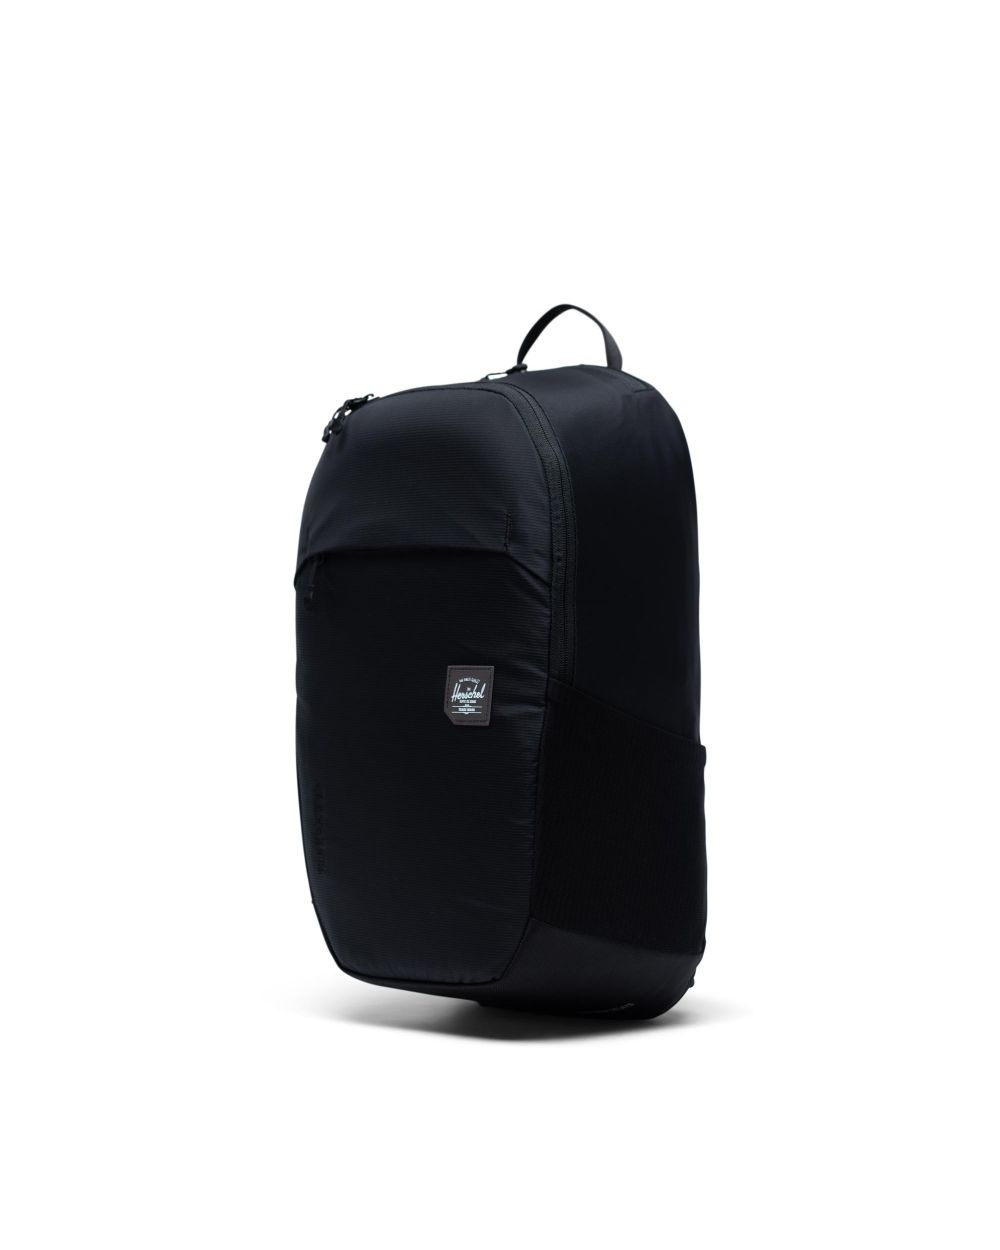 Mammoth Backpack Medium | Herschel Supply Company